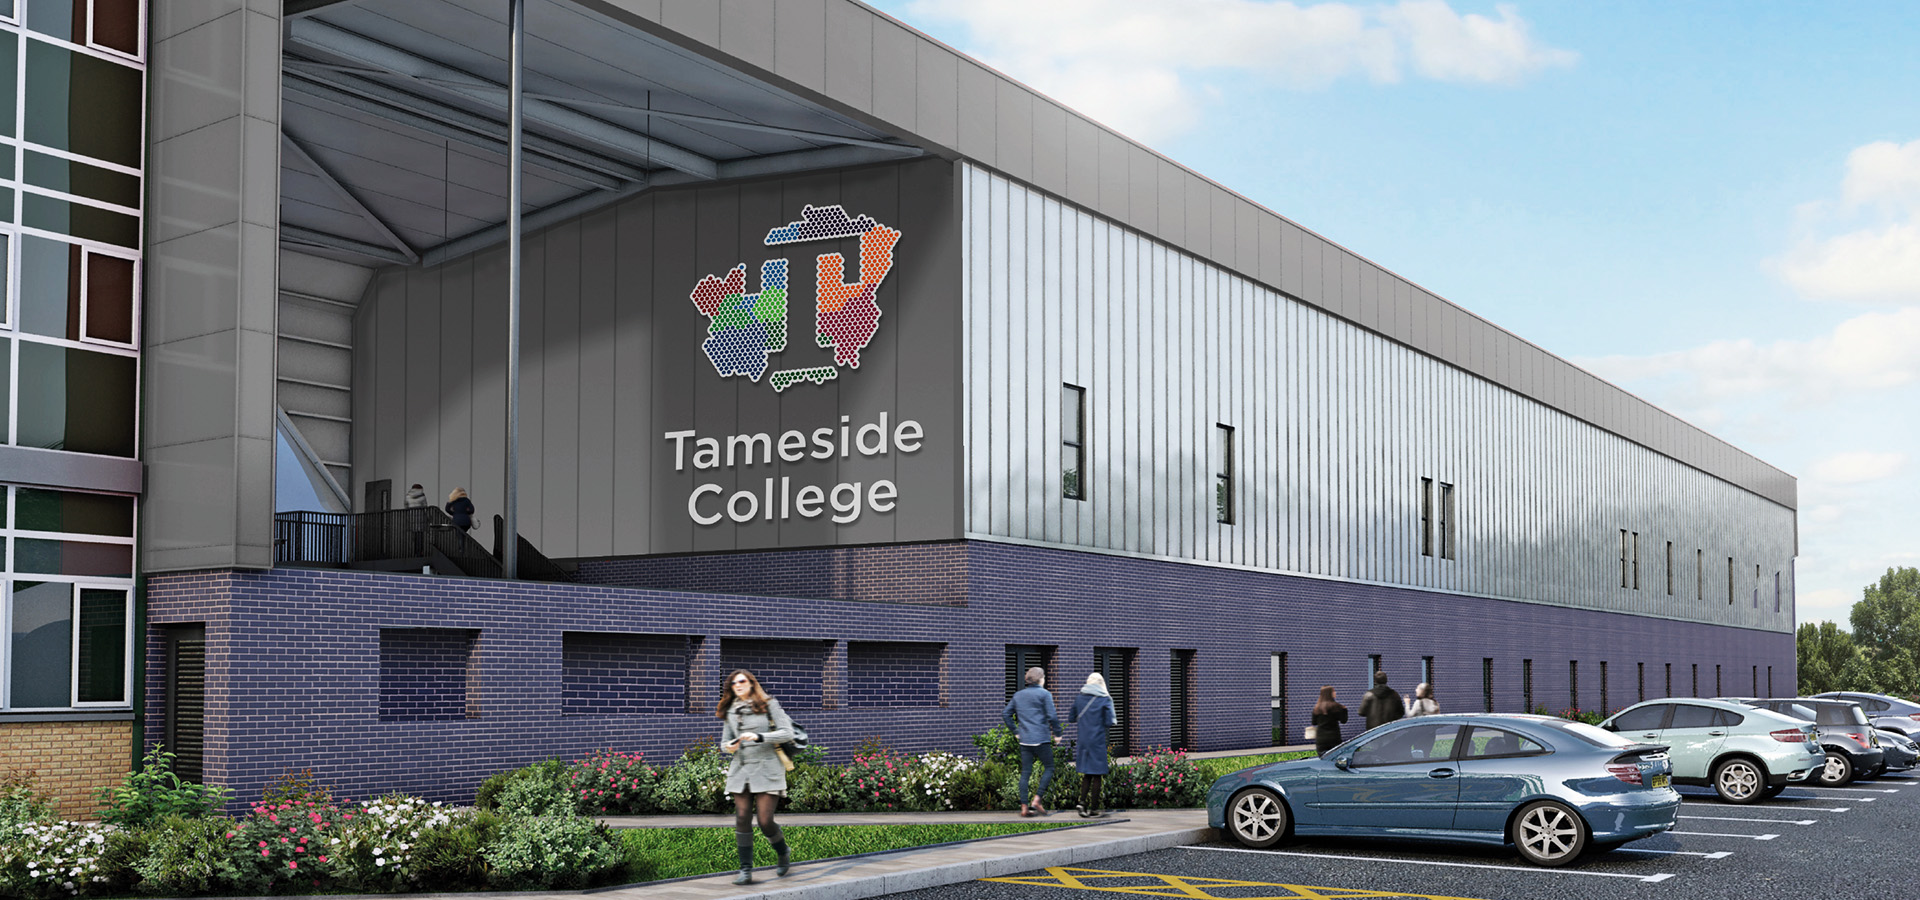 Tameside College Signage